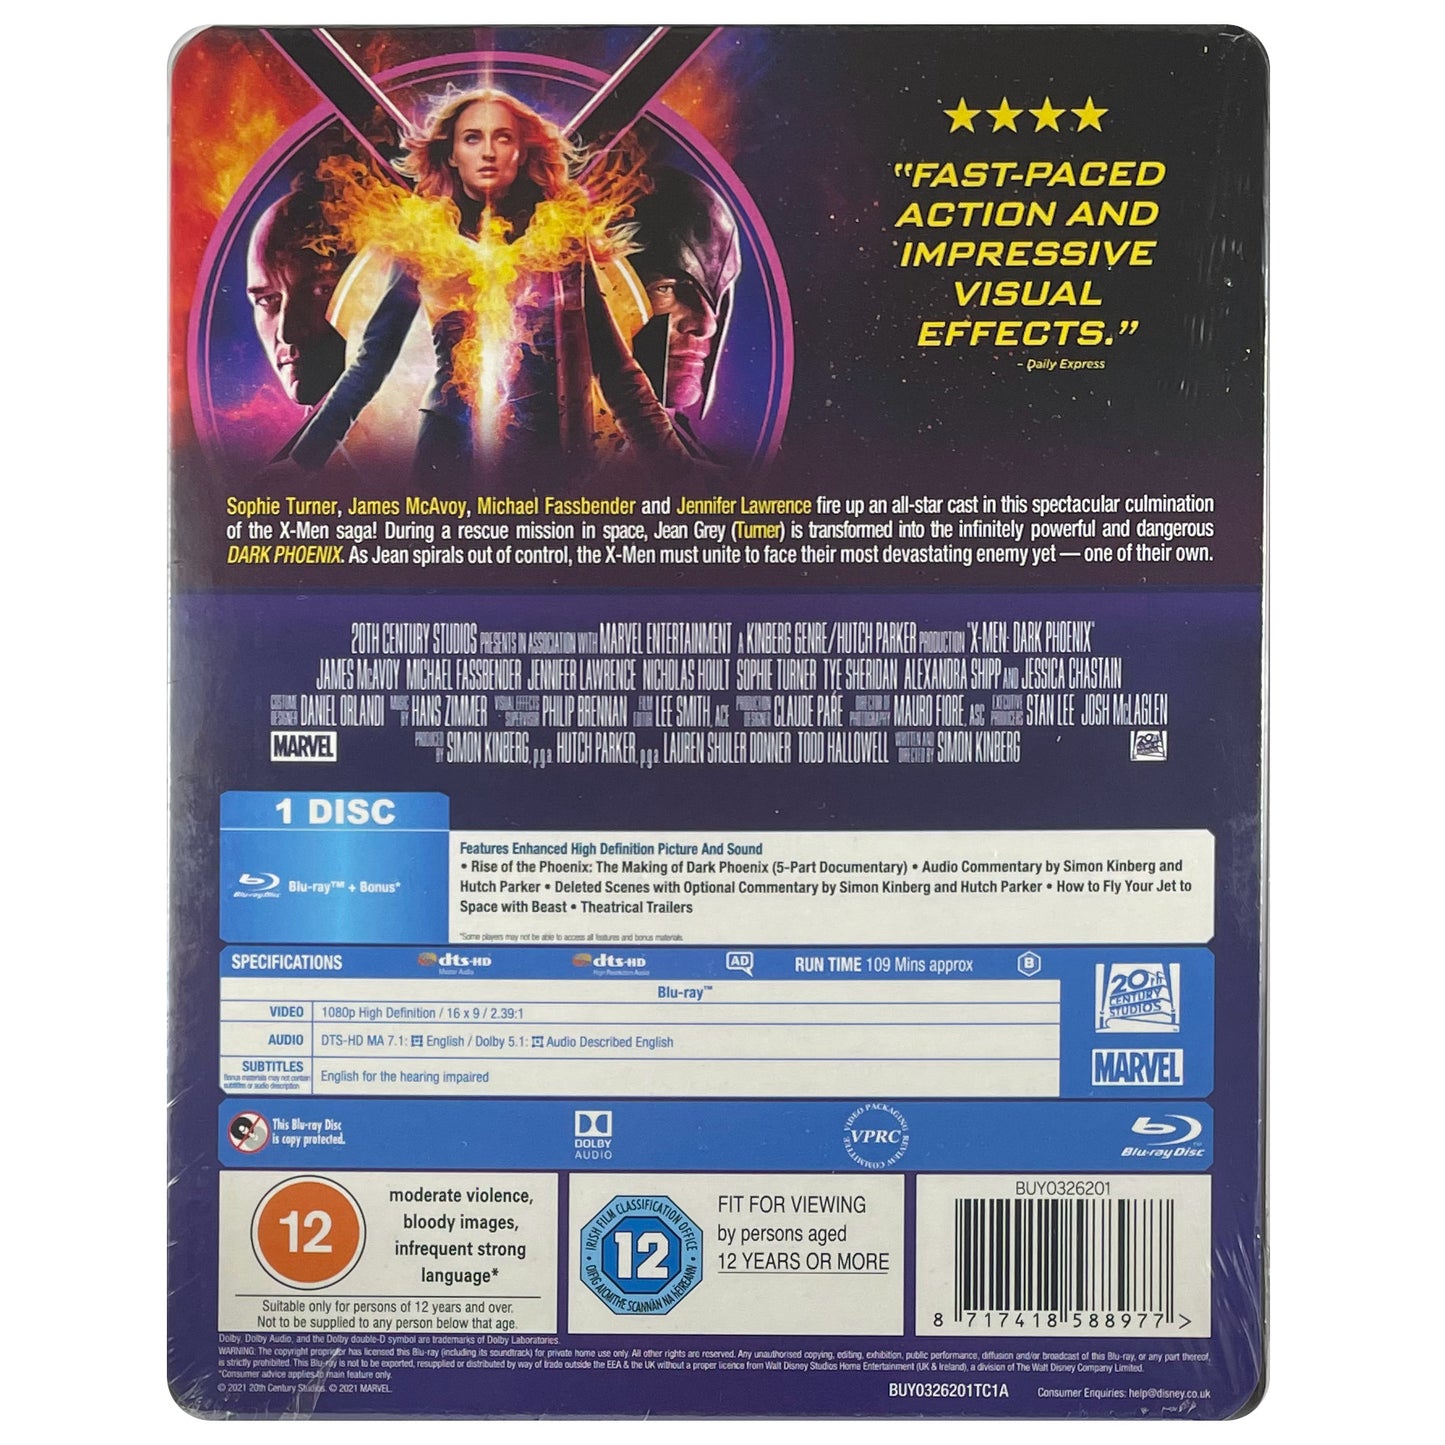 X-Men: Dark Phoenix Lenticular Blu-Ray Steelbook